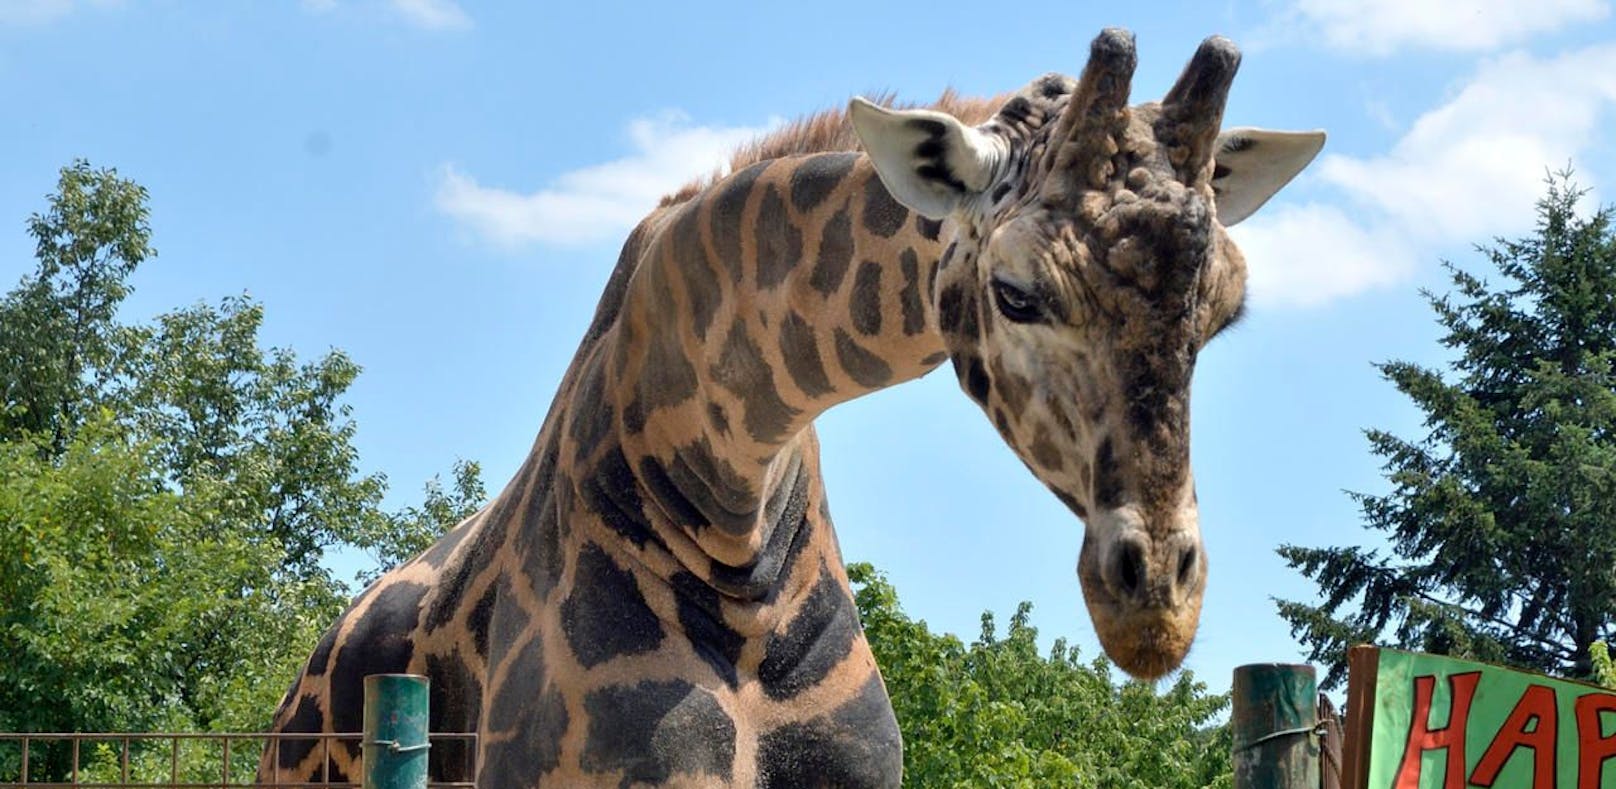 Trauriger Mai: Giraffenbulle "Kimba" verstarb kurz vor seinem 28. Geburtstag im Tiergarten Schönbrunn. ---&gt; <a href="https://www.heute.at/s/tiefe-trauer-in-schoenbrunn-giraffe-kimbar-ist-tot-100142433">ARTIKEL </a><br>